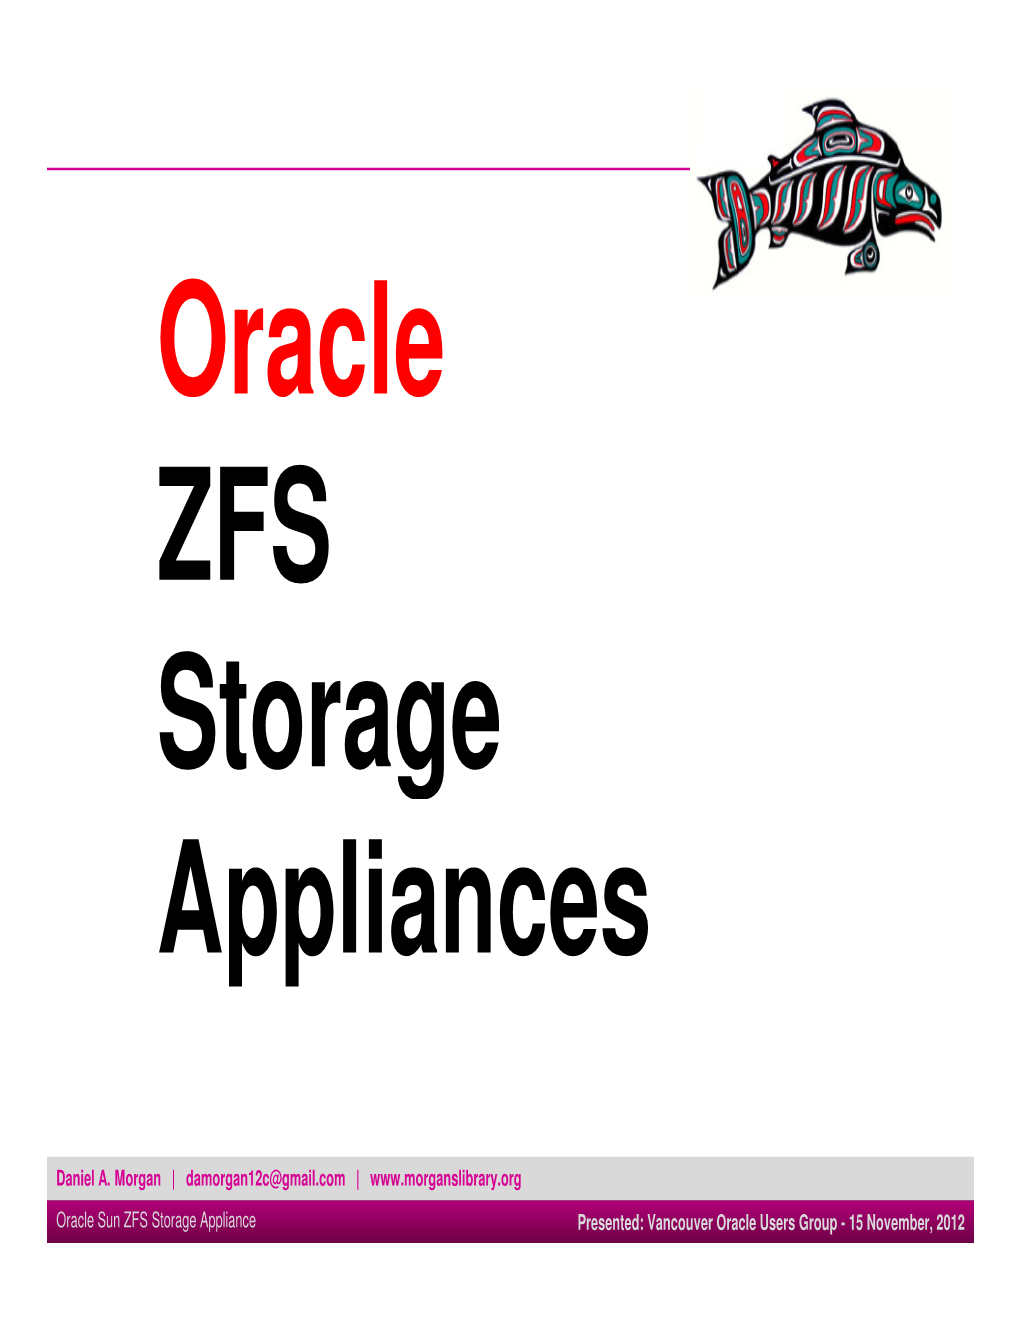 Oracle ZFS Storage Appliances